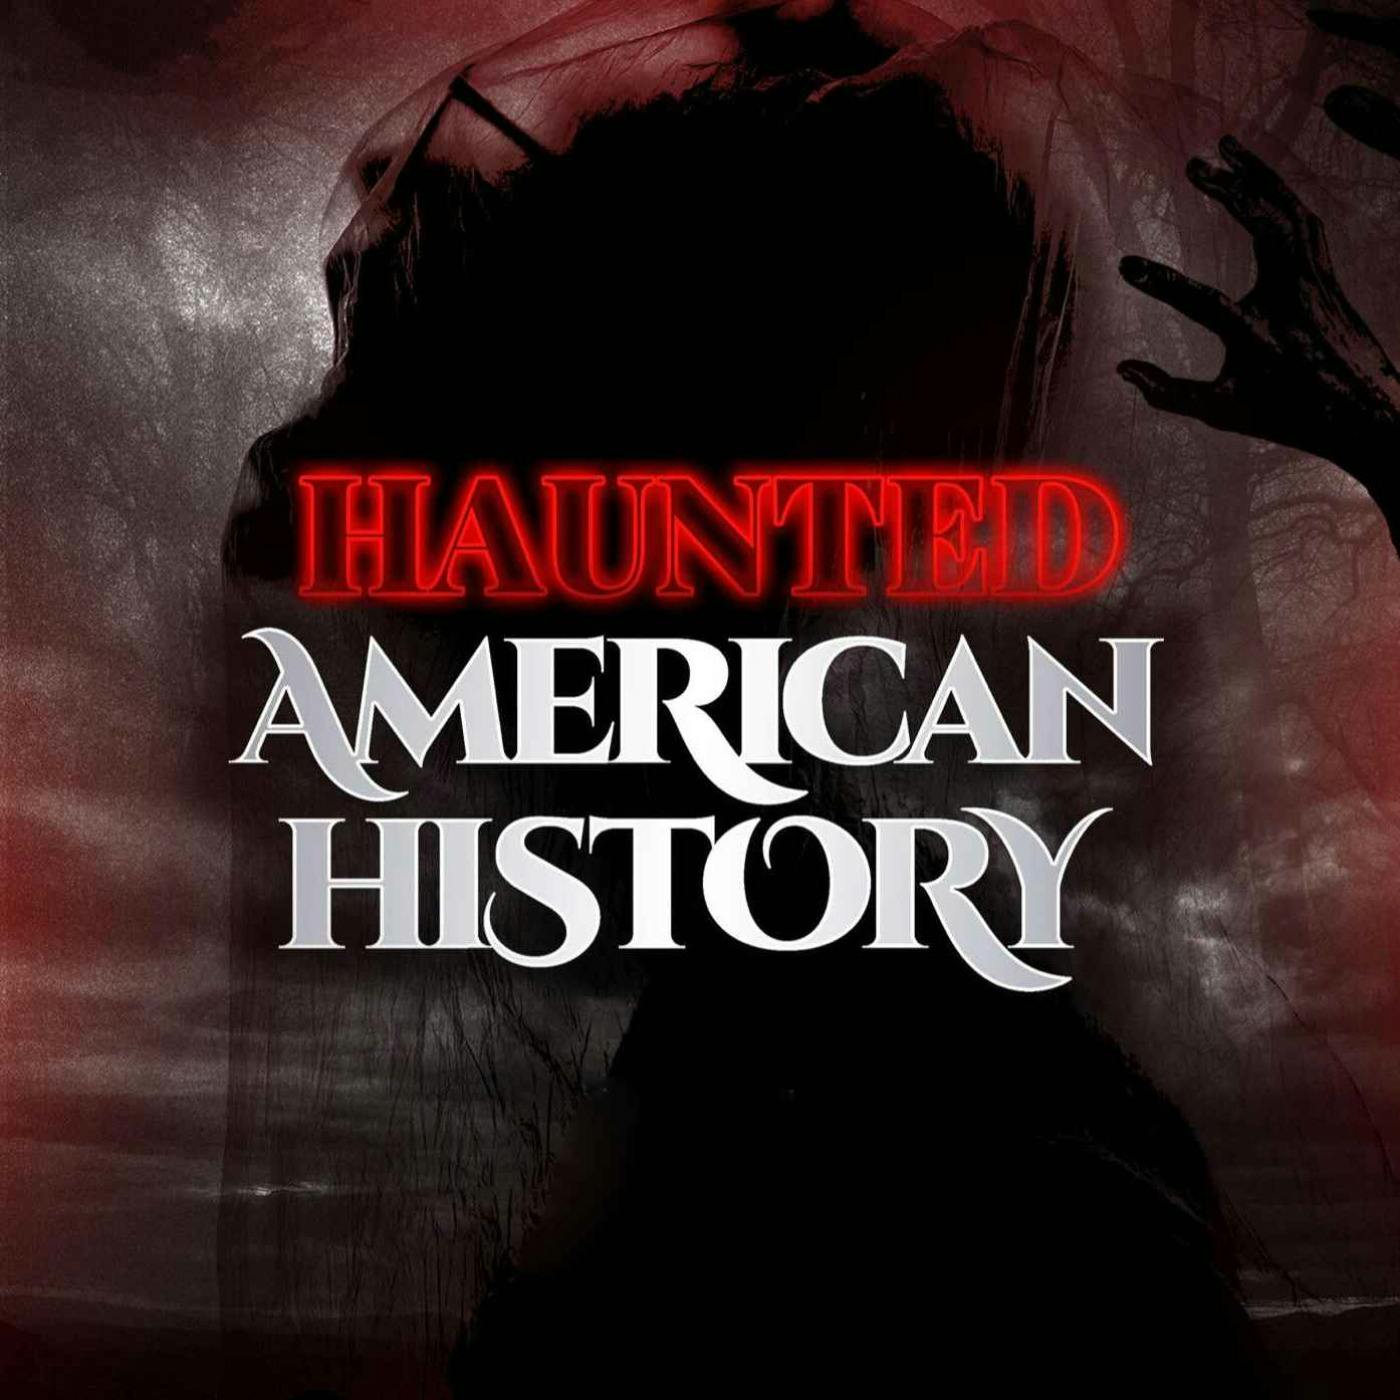 Presenting: Haunted American History